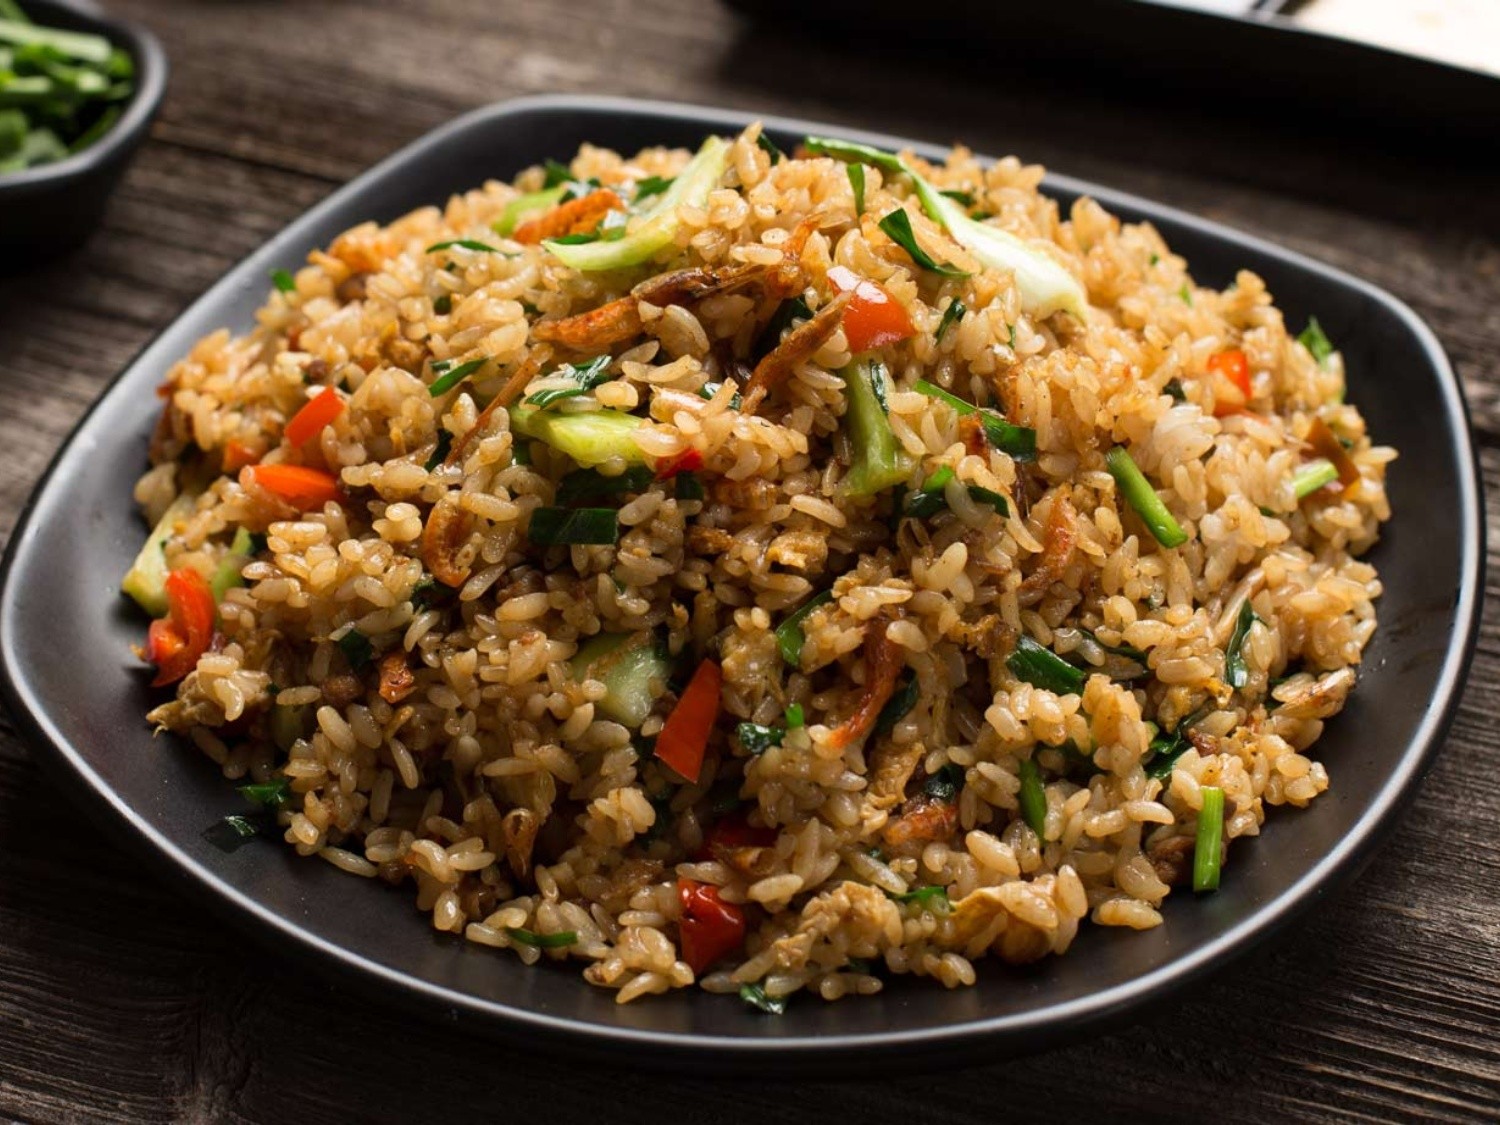 arroz frito chino - arroz frito chino